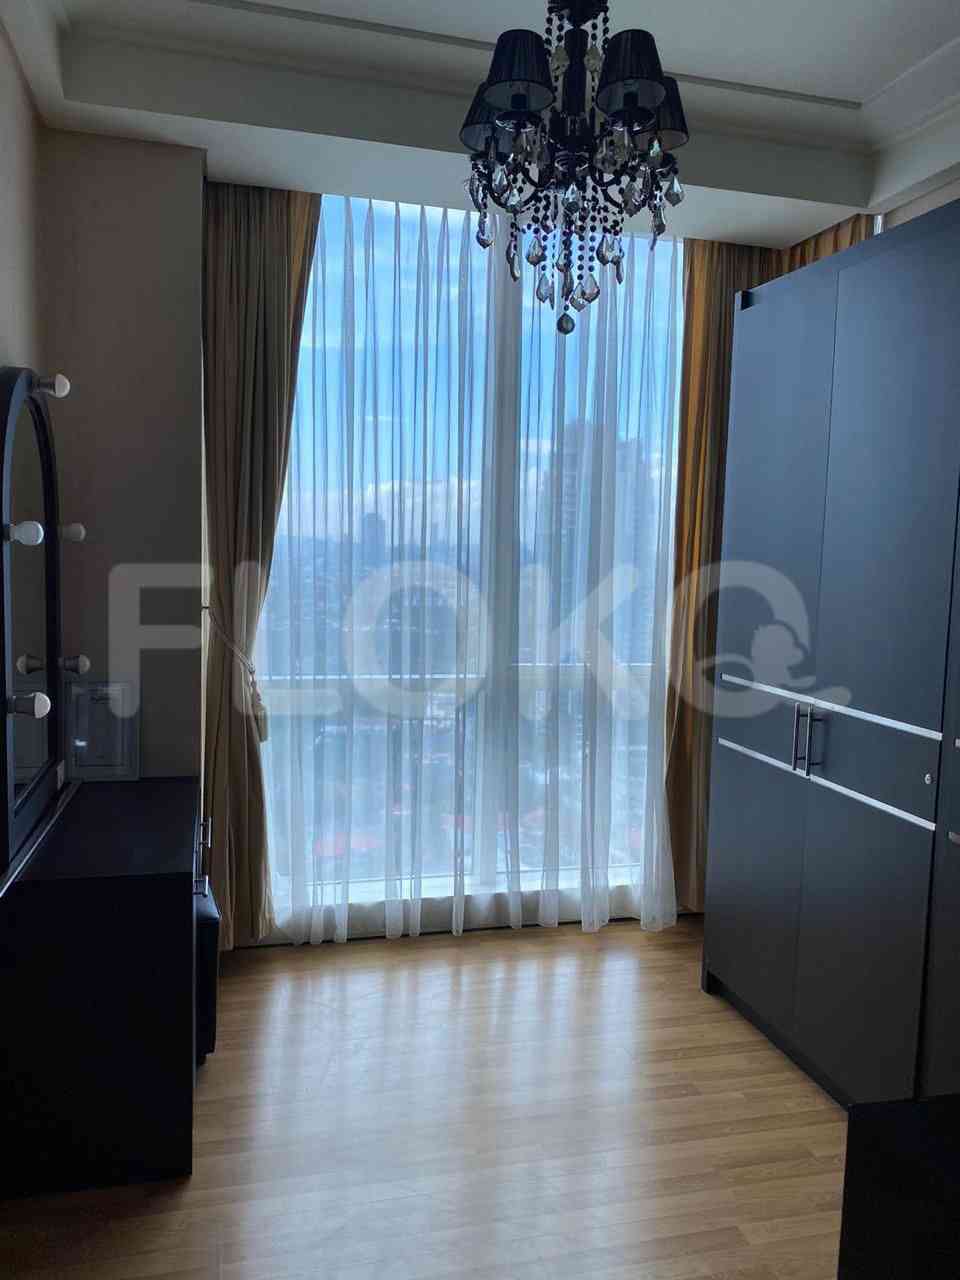 2 Bedroom on 27th Floor for Rent in The Peak Apartment - fsua47 4